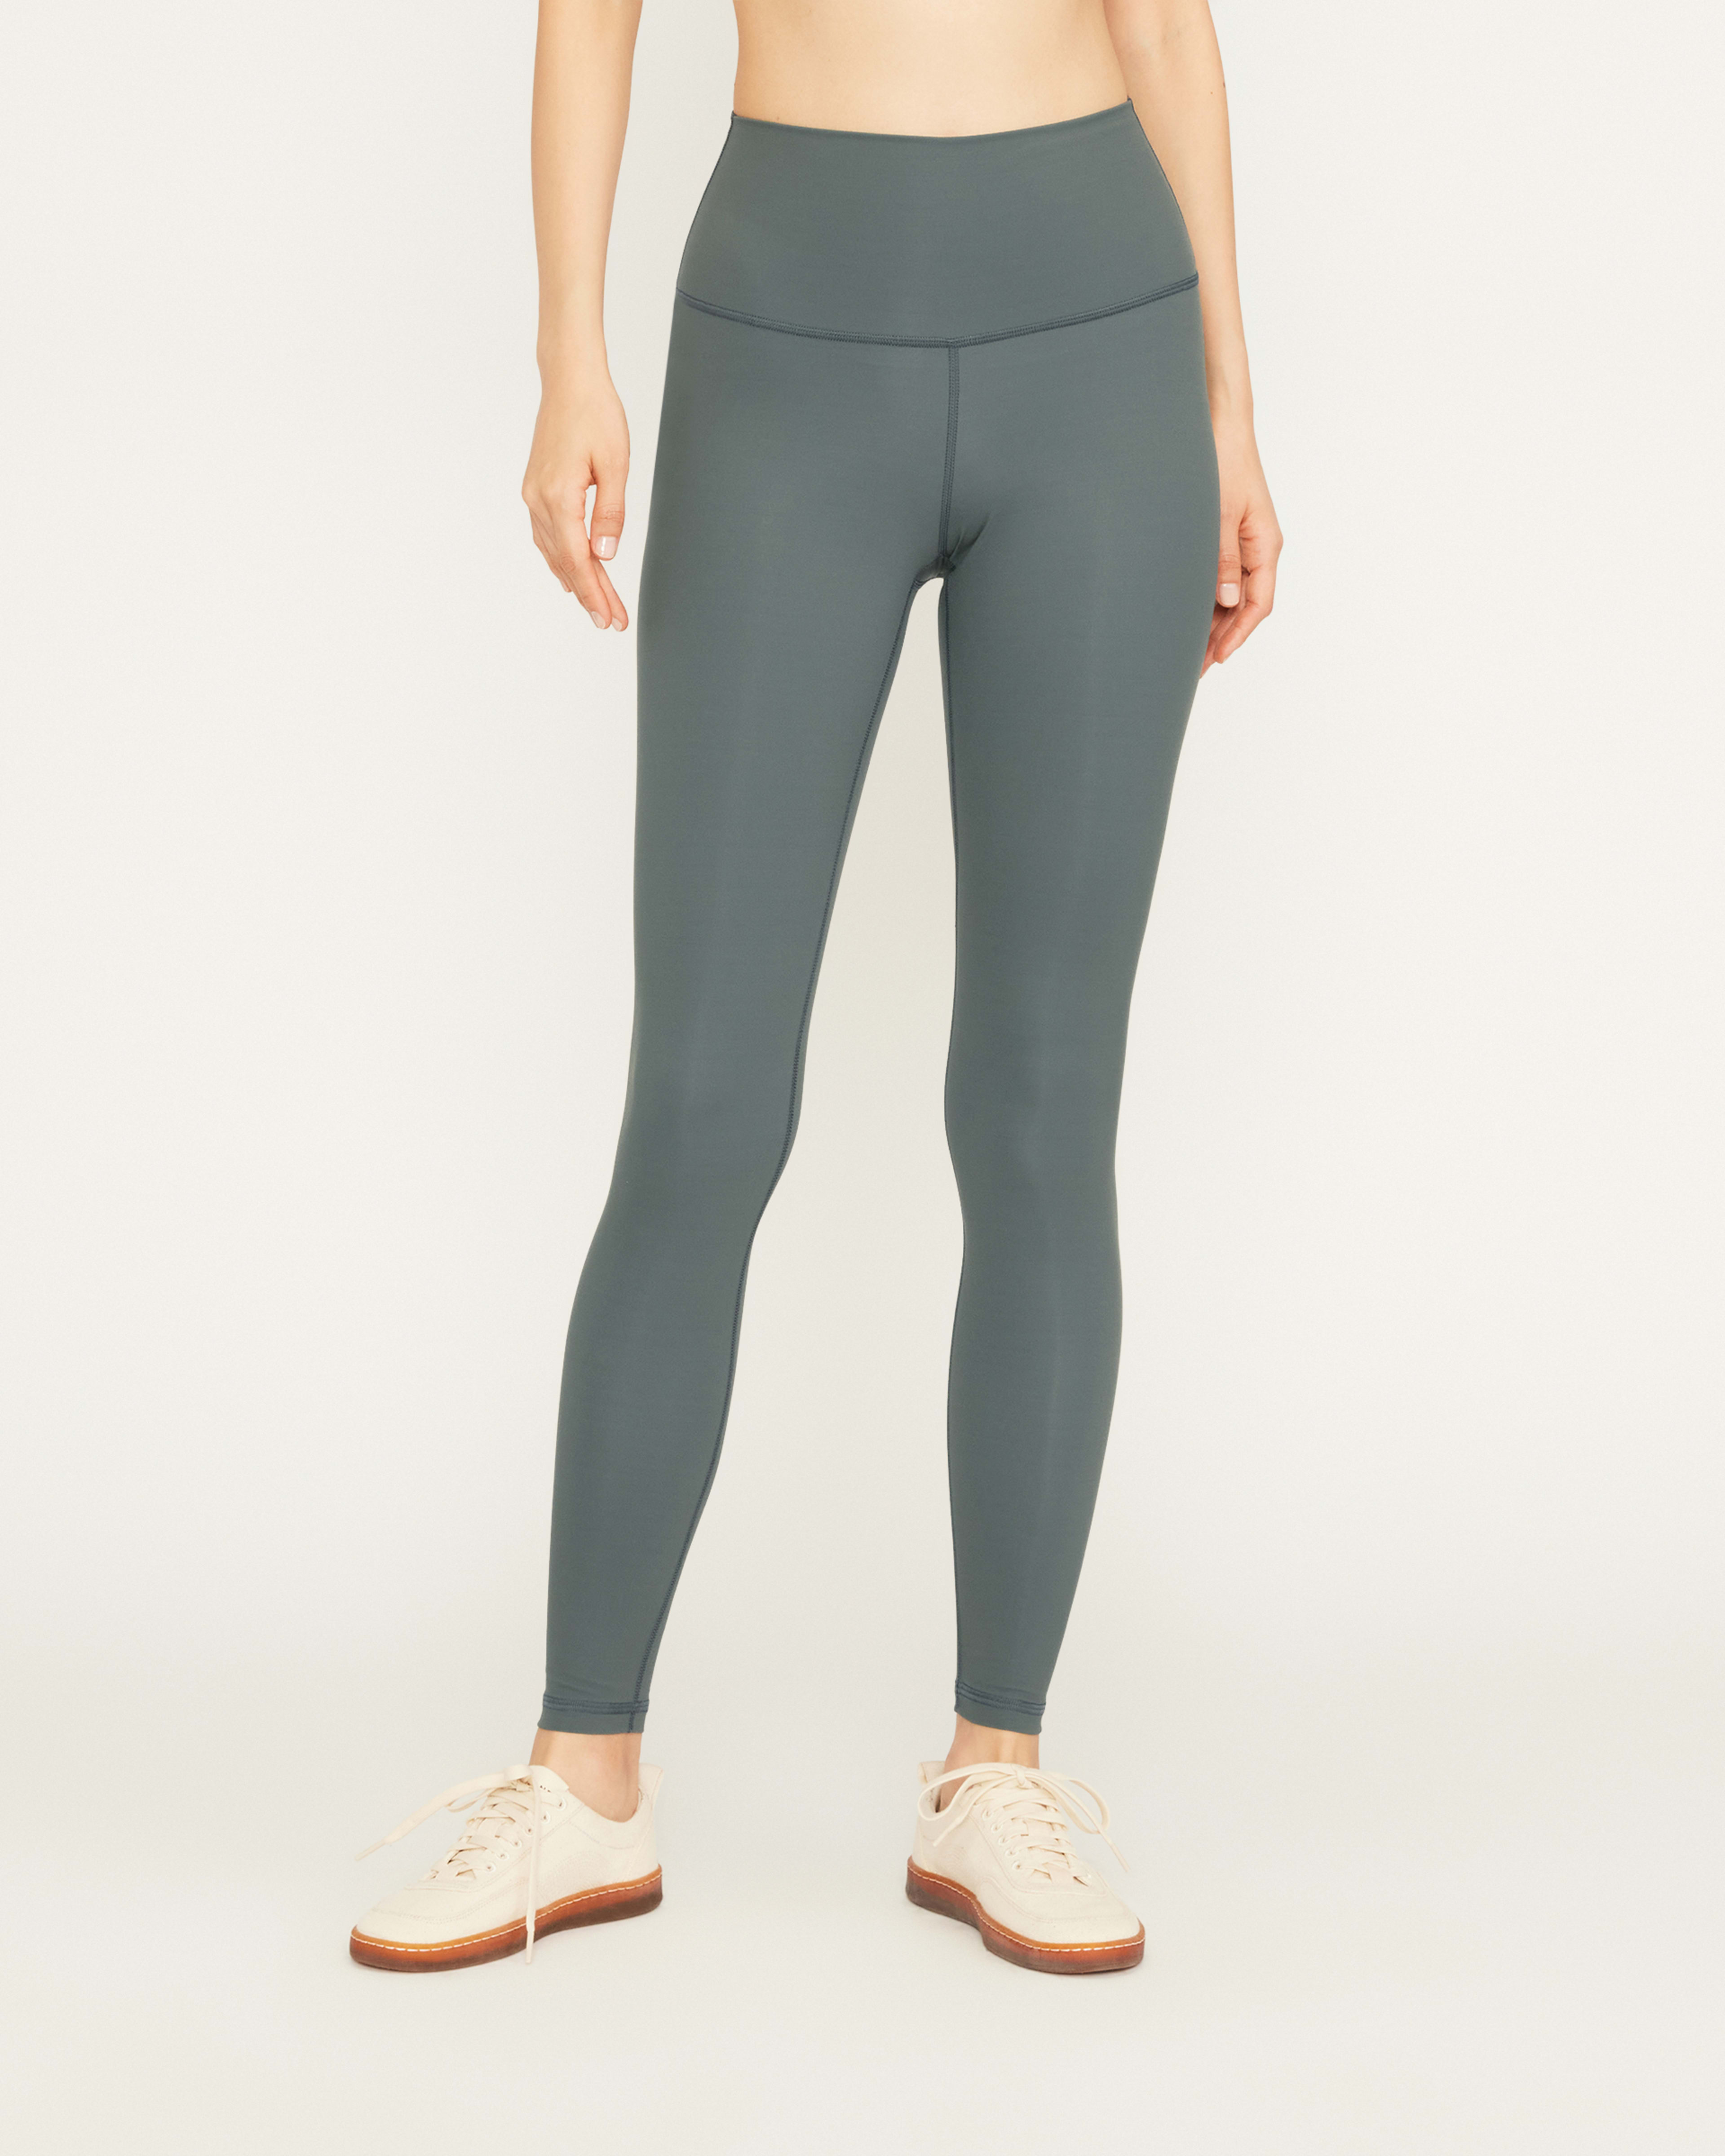 Tek Gear Dry Tek Women's Yoga Pants Stretch Spandex Grey Size Medium